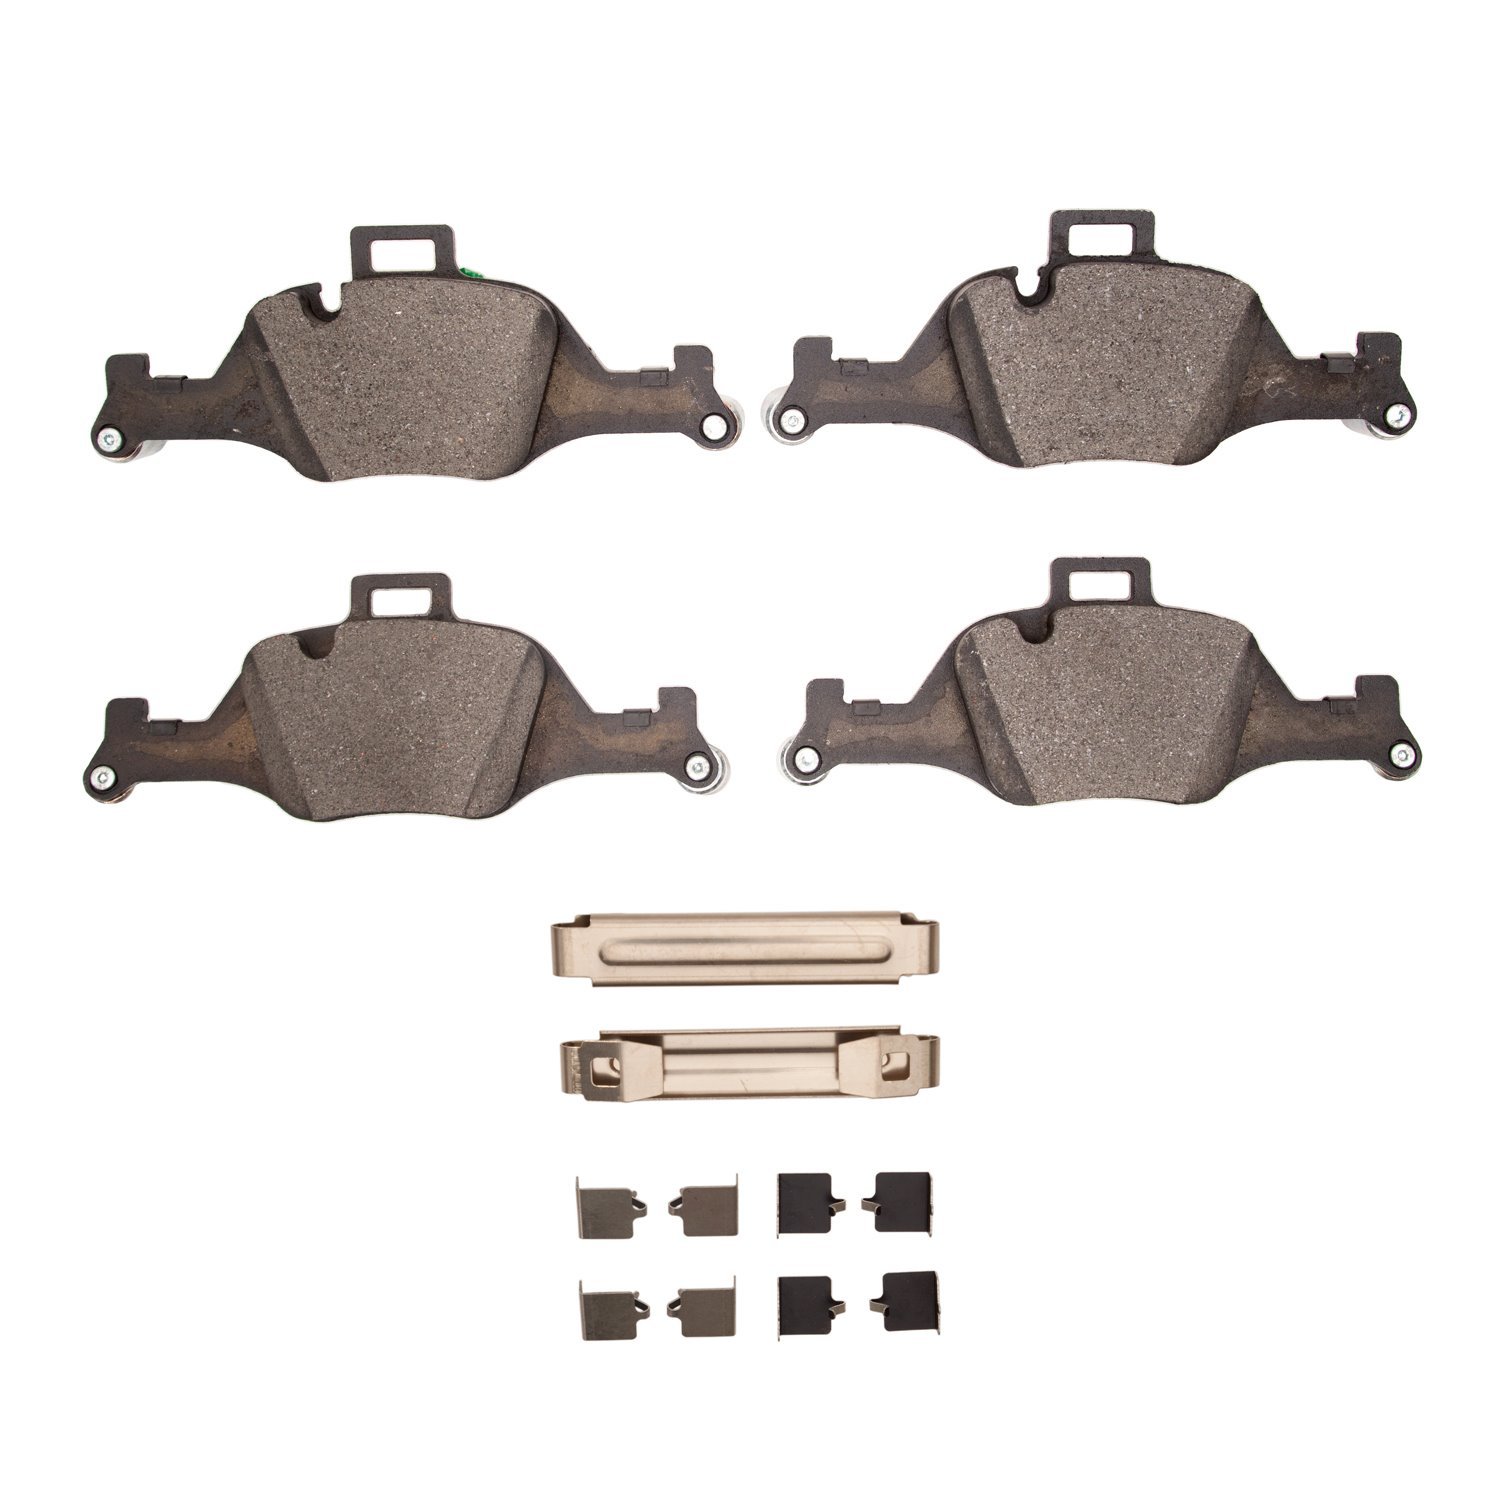 1310-2060-01 3000-Series Ceramic Brake Pads & Hardware Kit, Fits Select BMW, Position: Front